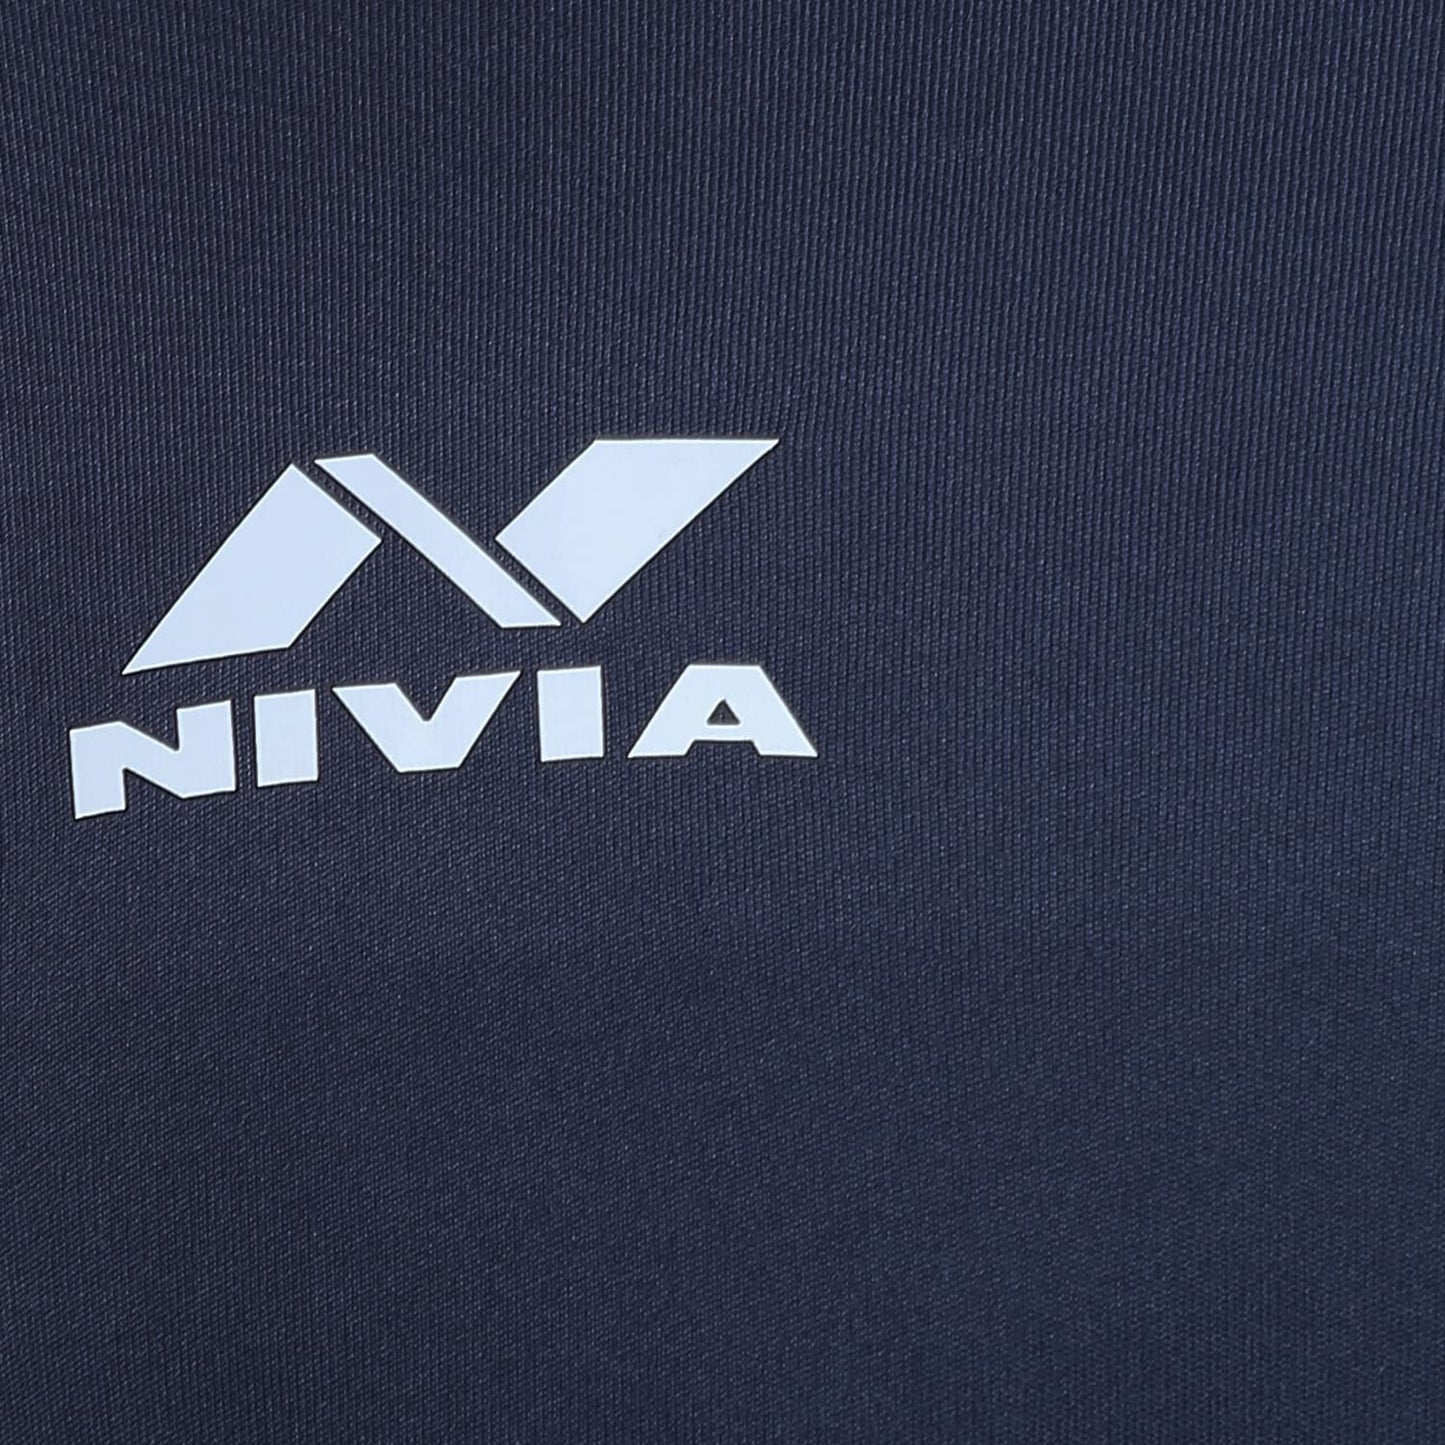 Nivia 7175 Destroyer Football Jersey Set for Men, Navy Blue/Sky Blue - Best Price online Prokicksports.com